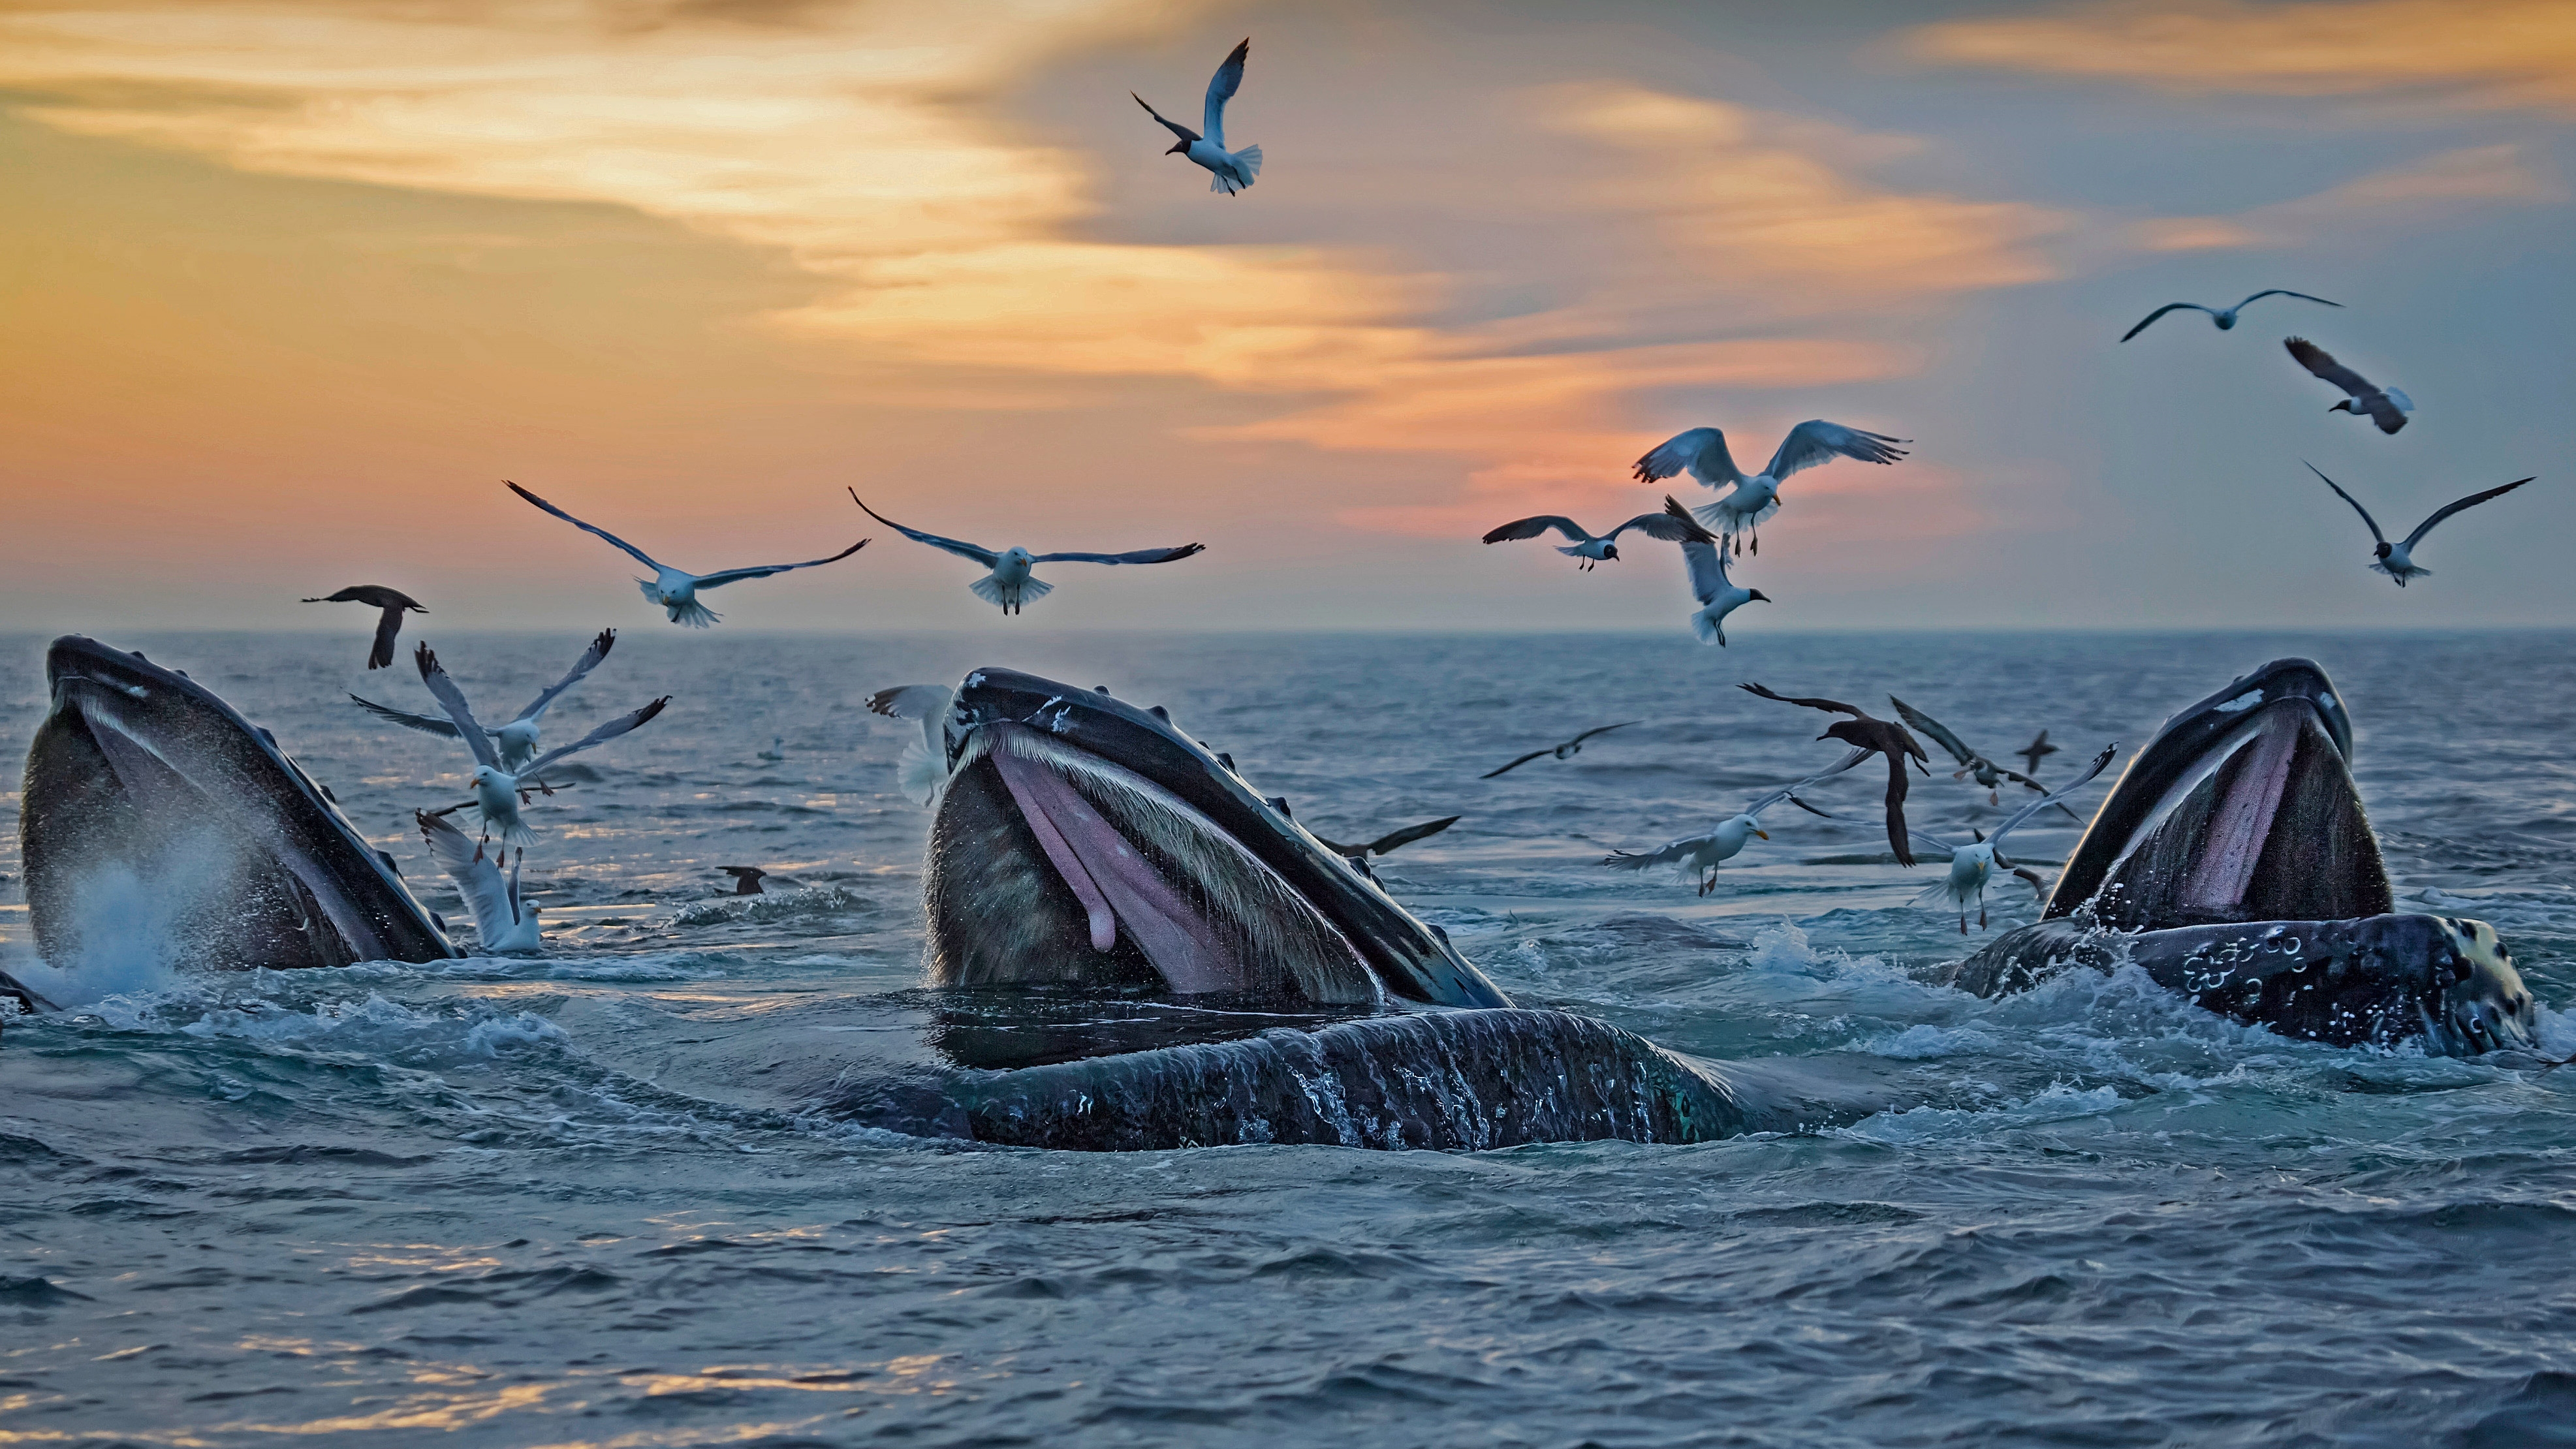 Humpback whales off the coast of Massachusetts by Eric Kulin